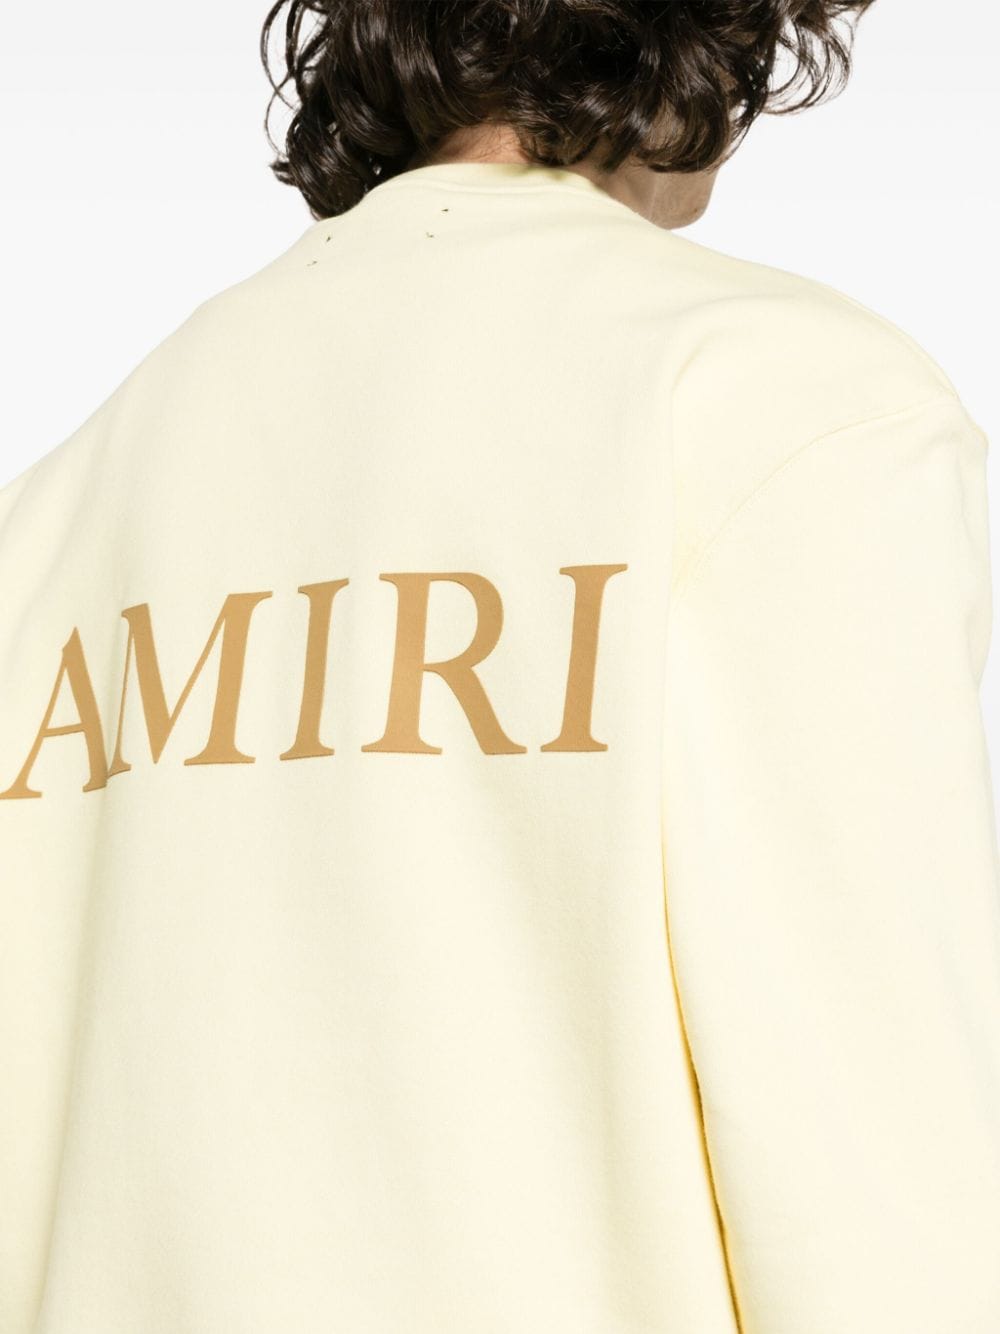 M.A. logo-print sweatshirt